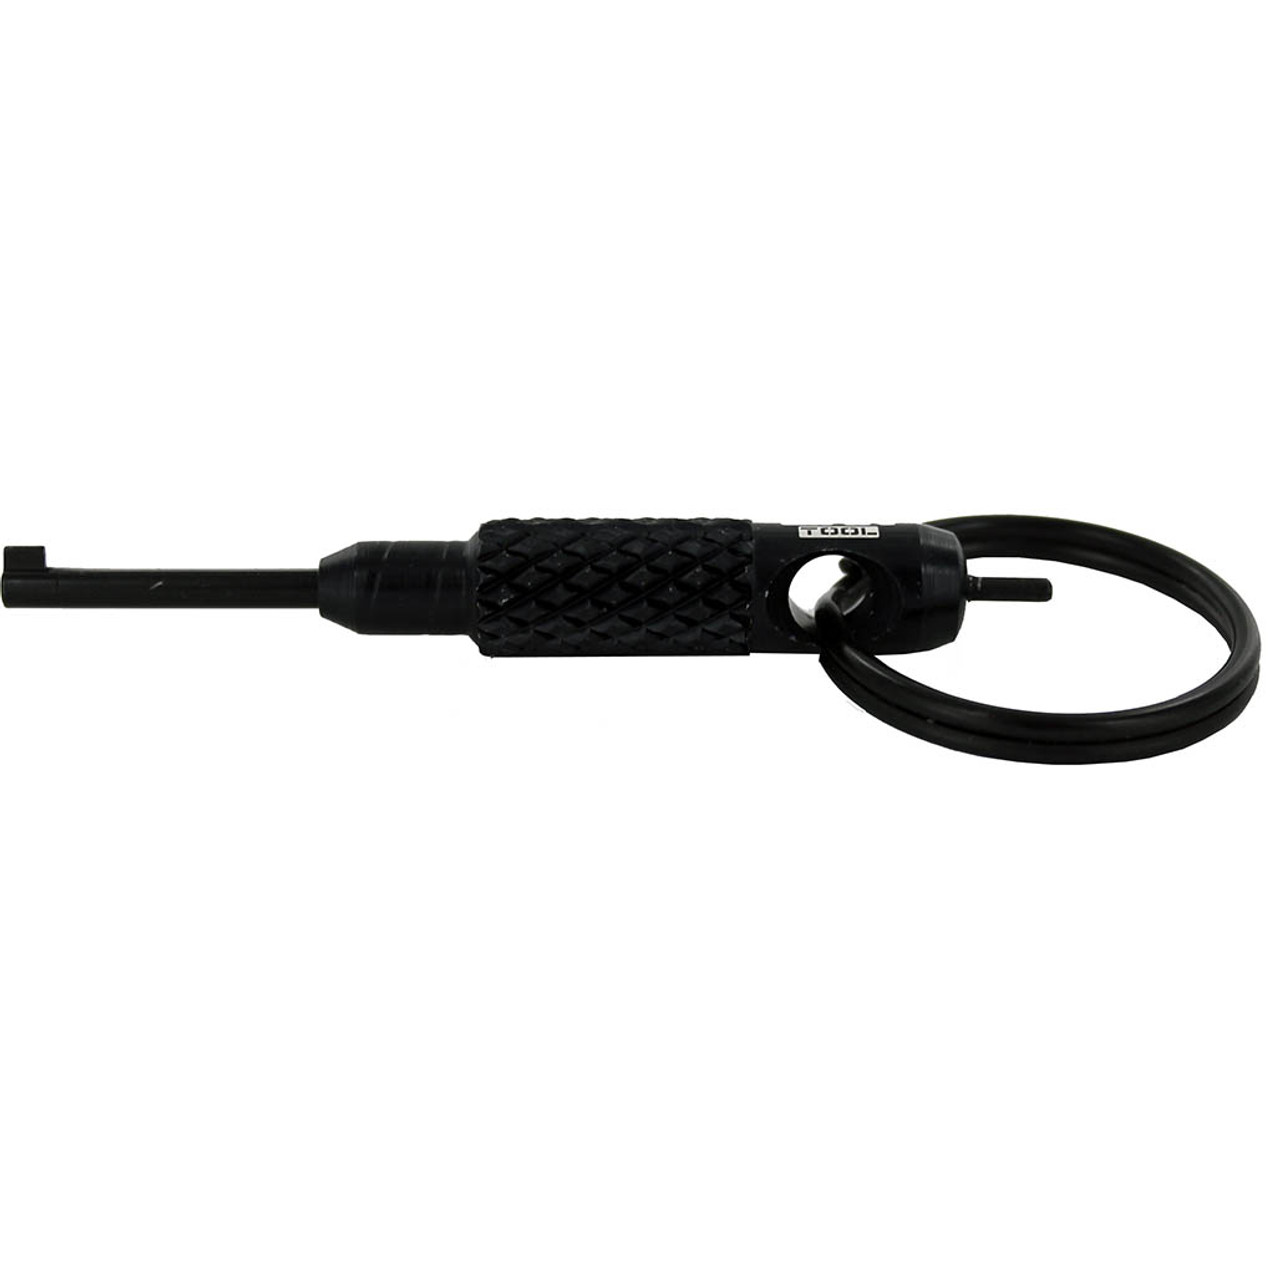 St. Louis Blues® Multi-tool Key Chain, Black